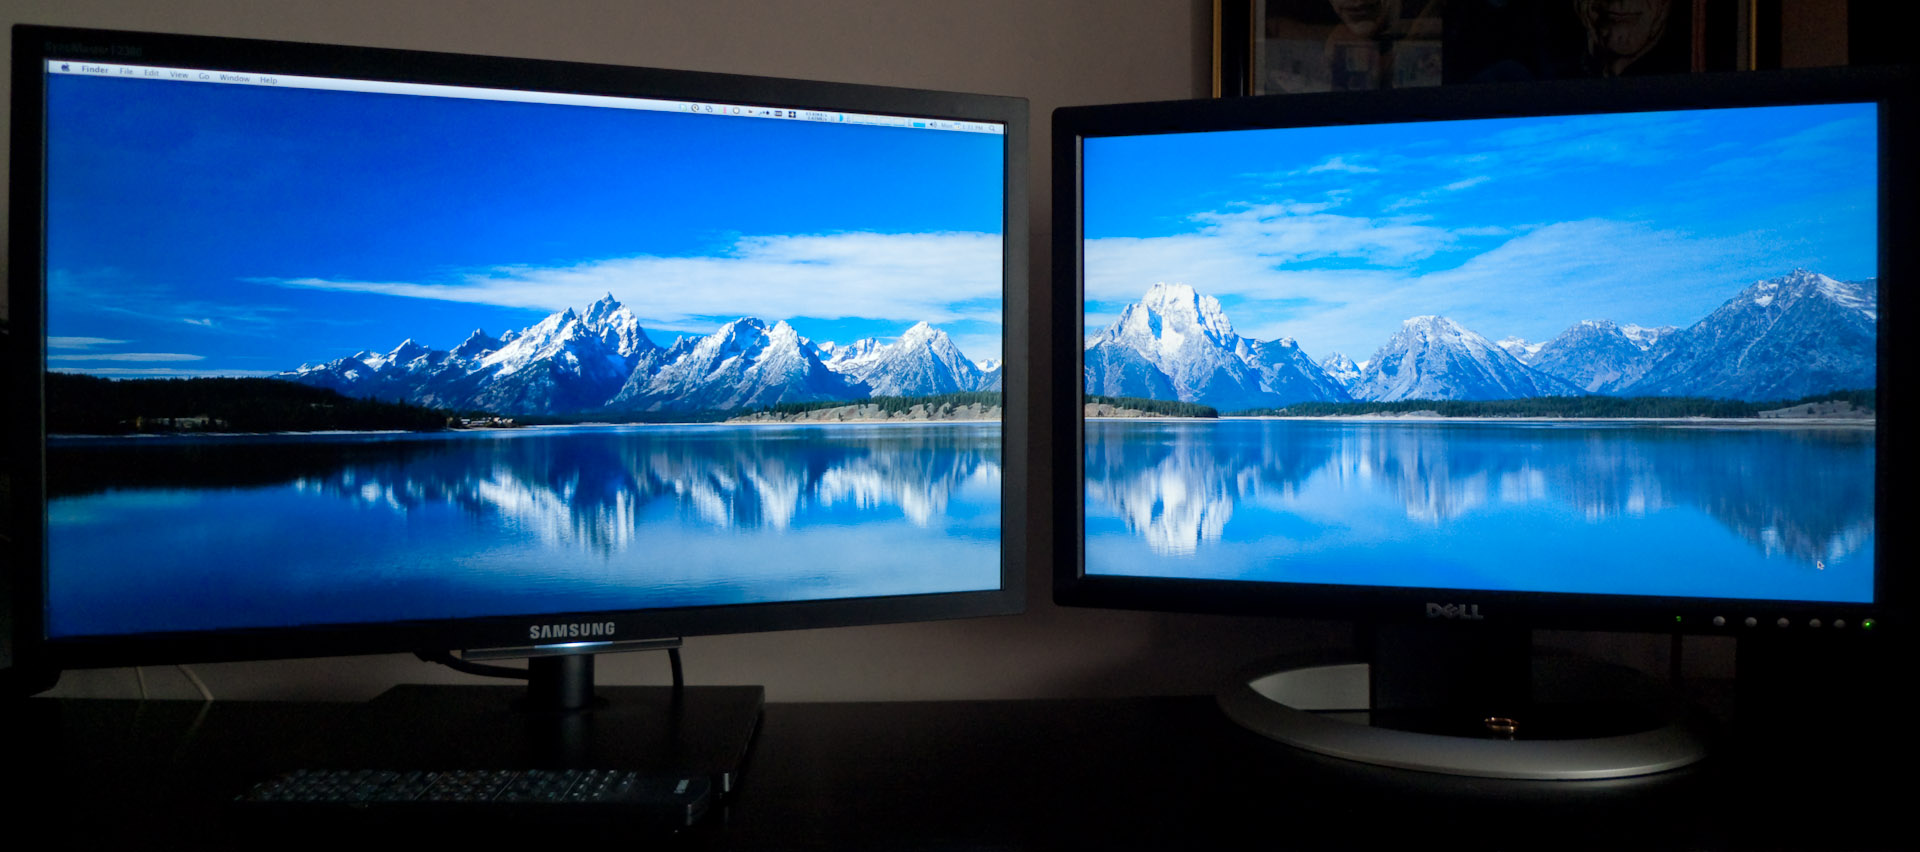 two monitors